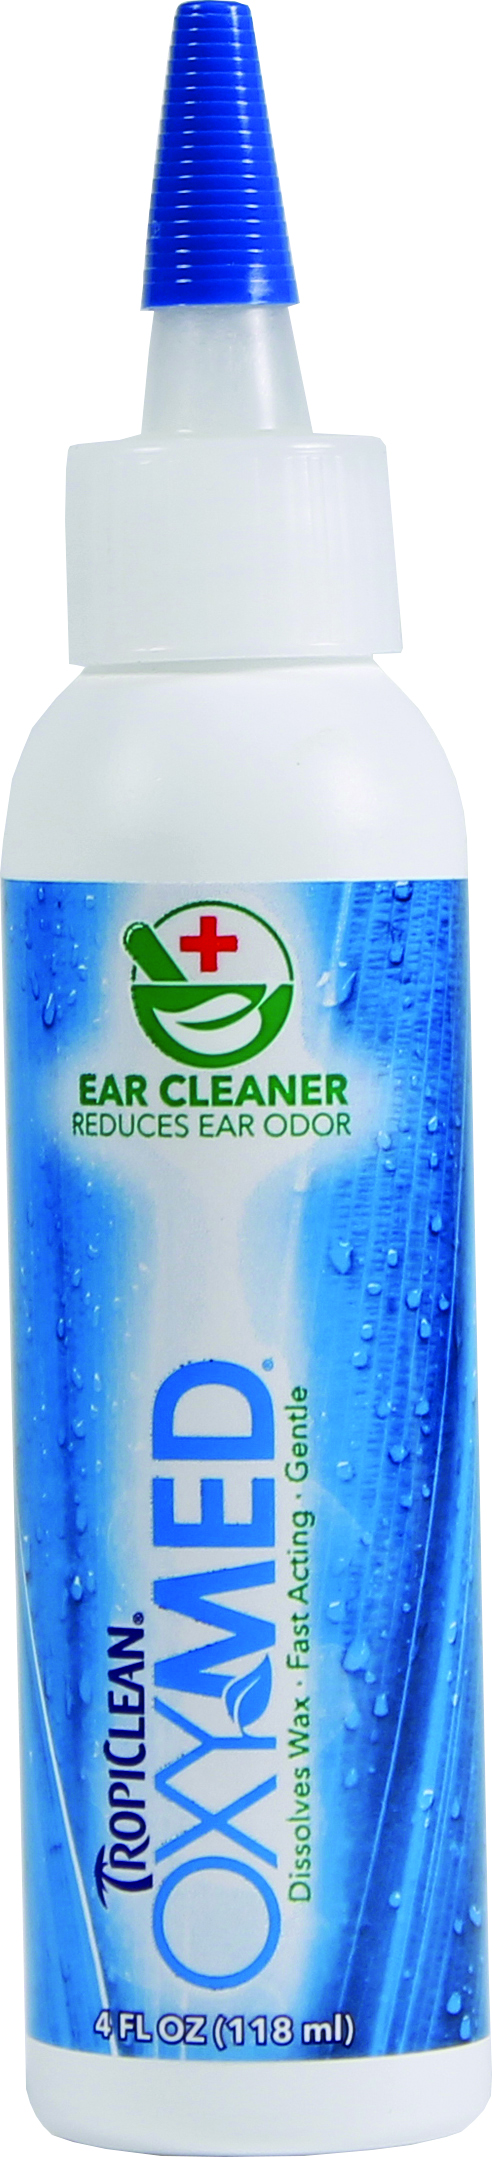 OXY-MED EAR CLEANER